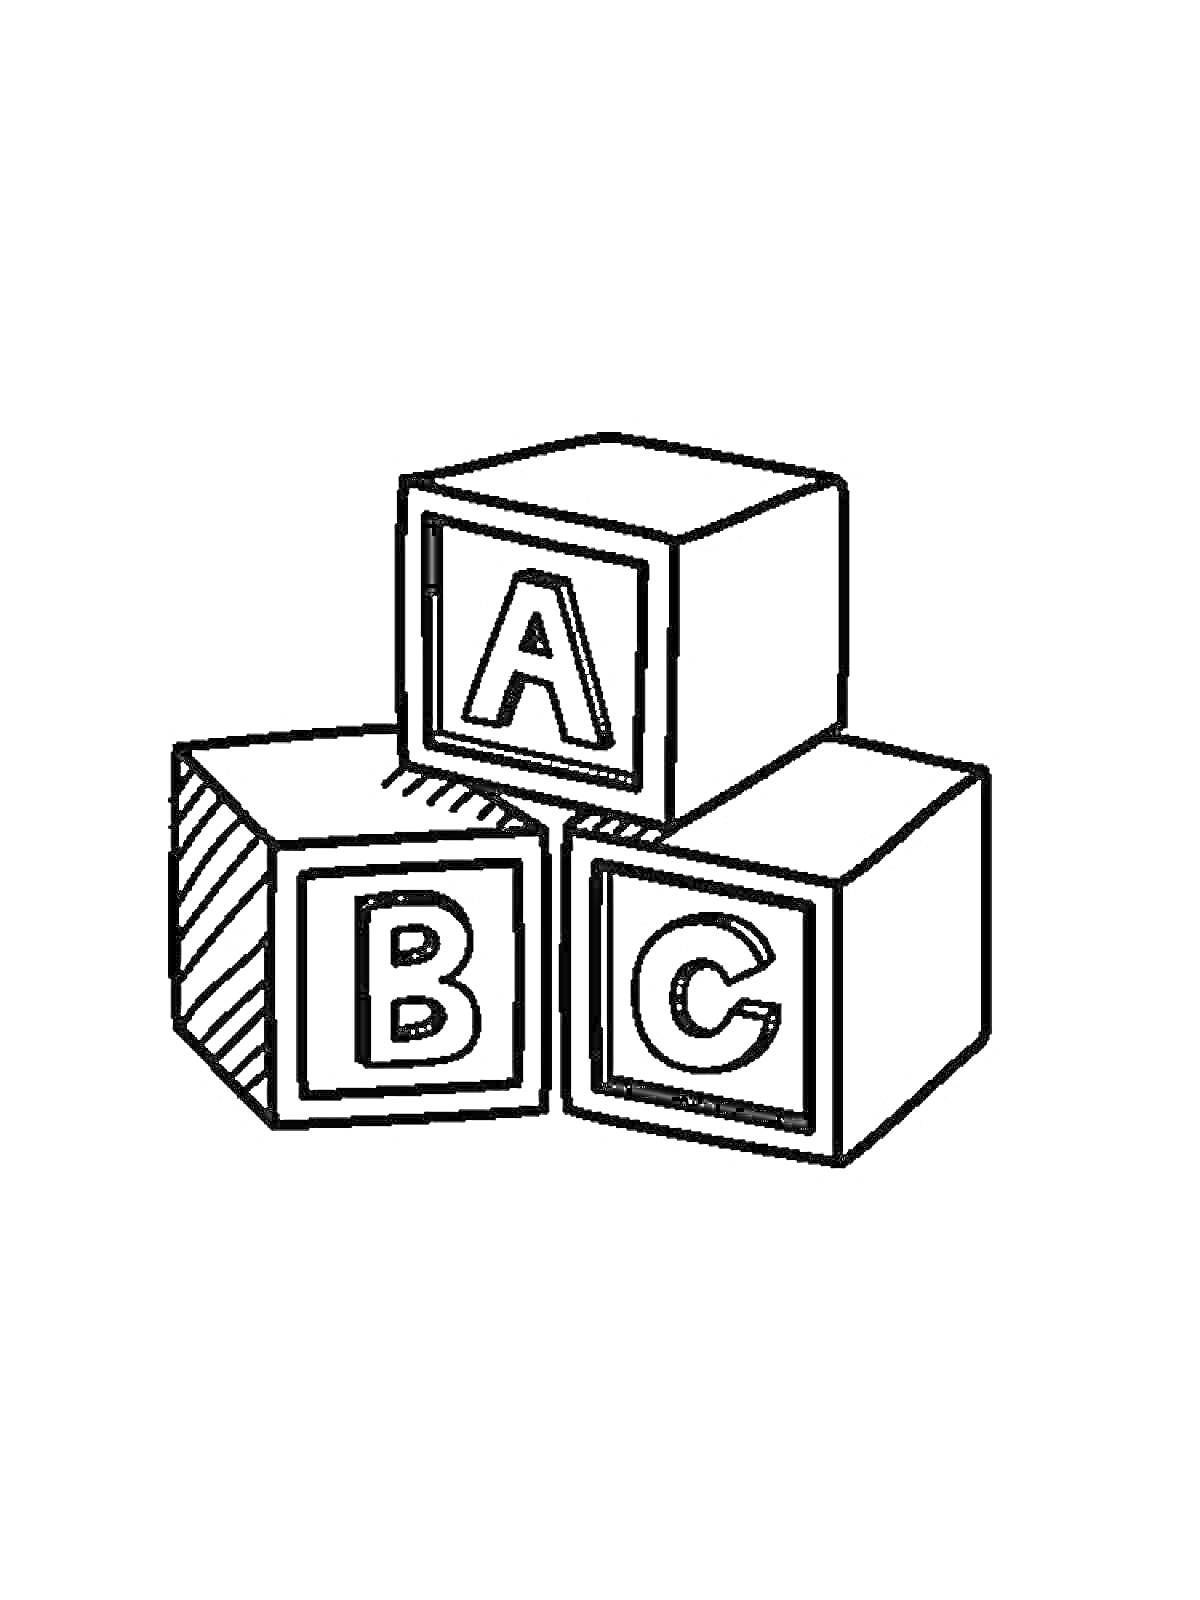 На раскраске изображено: Буквы, Алфавит, Буква А, Буква b, Кубики, Буква C